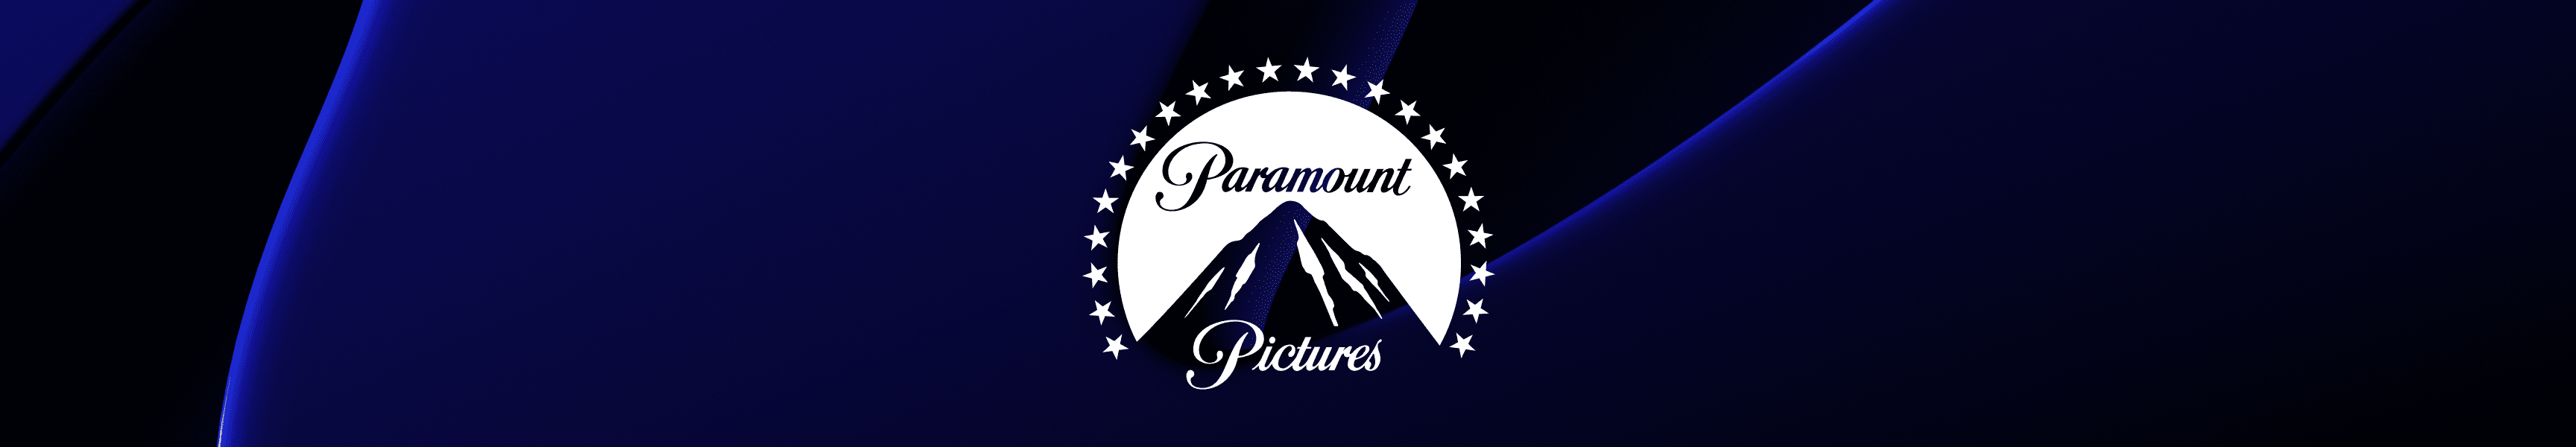 Paramount Pictures Tazas